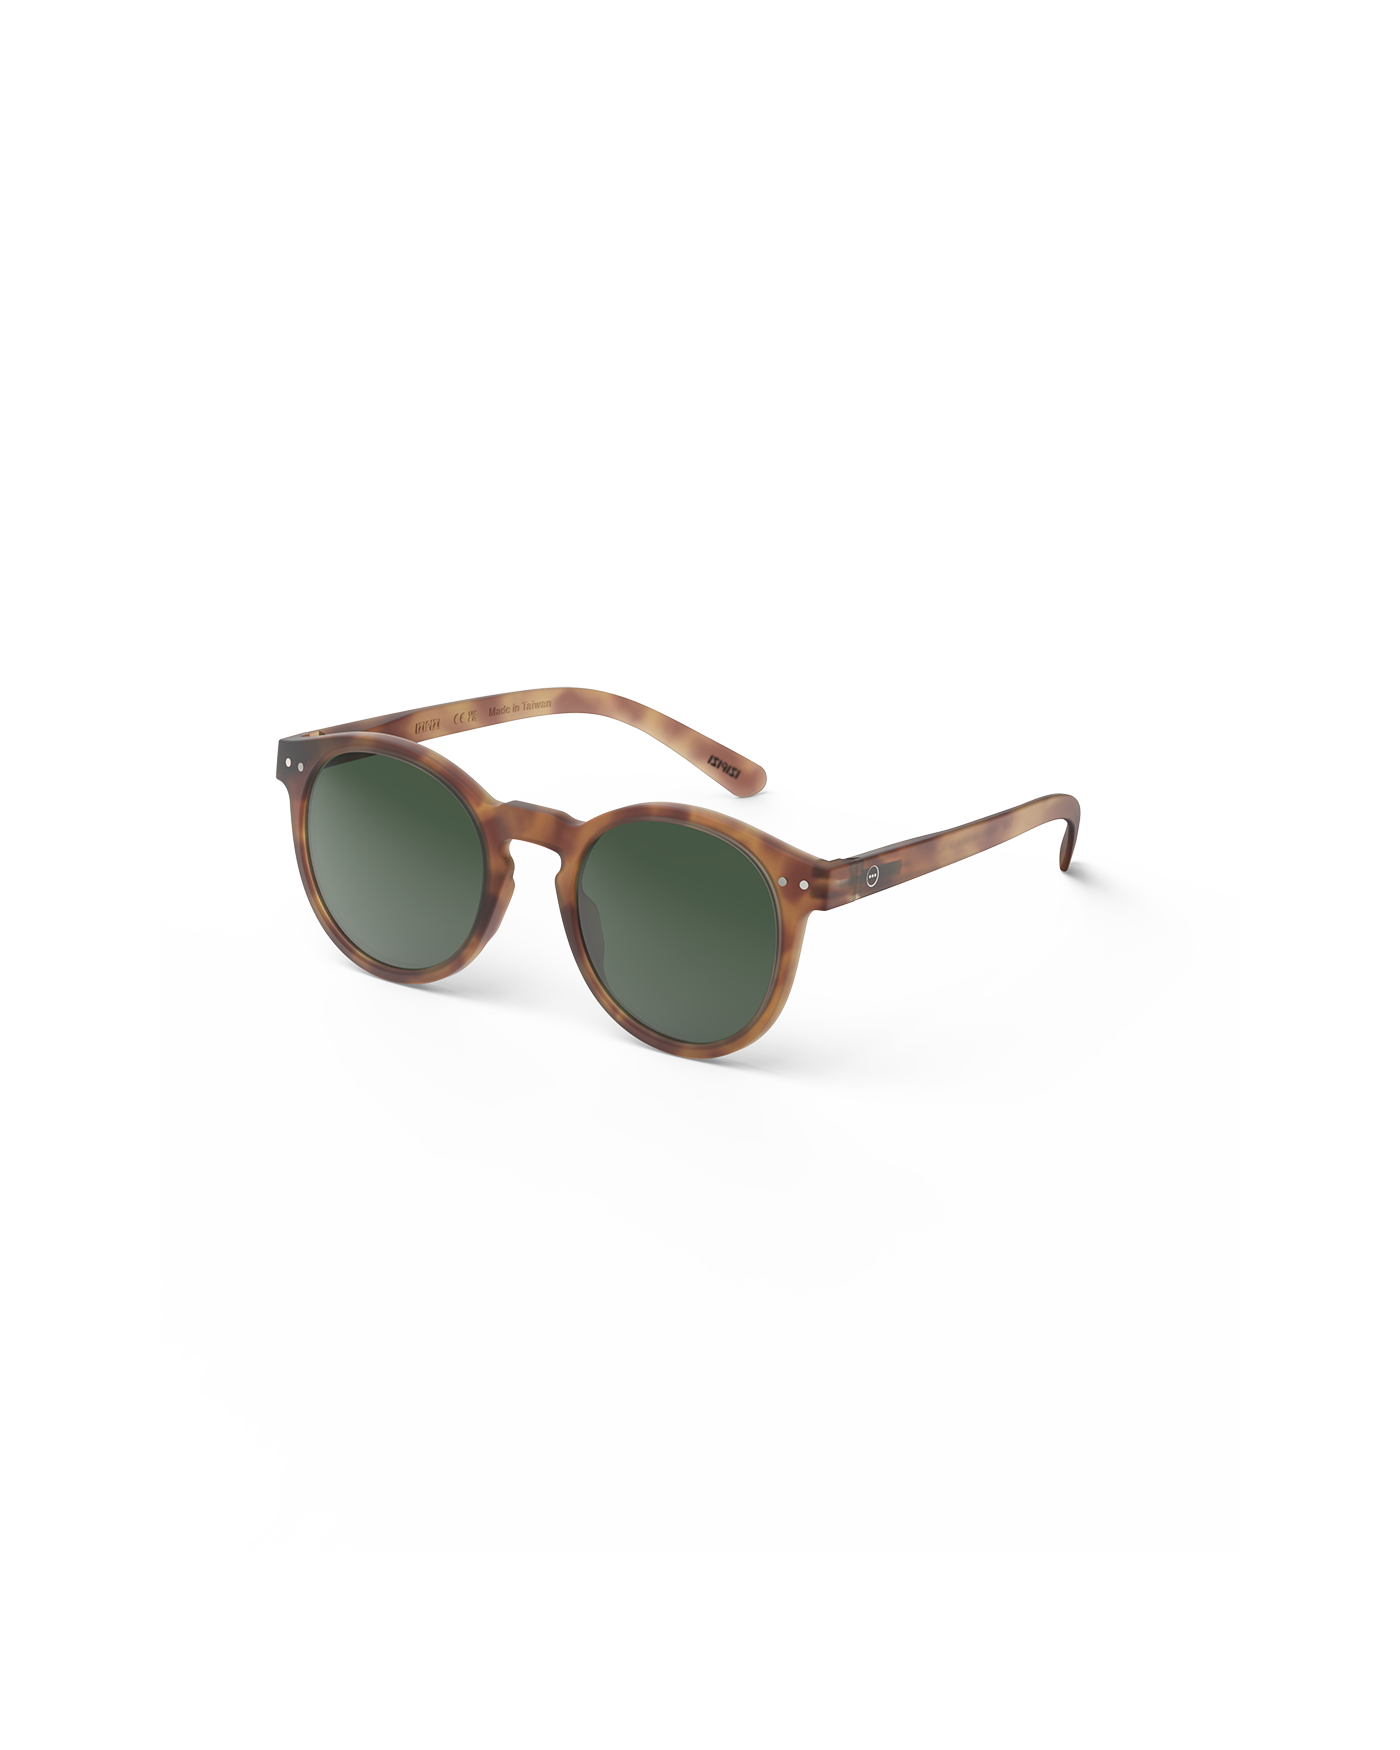 Sunglasses  - #M Shape Havane